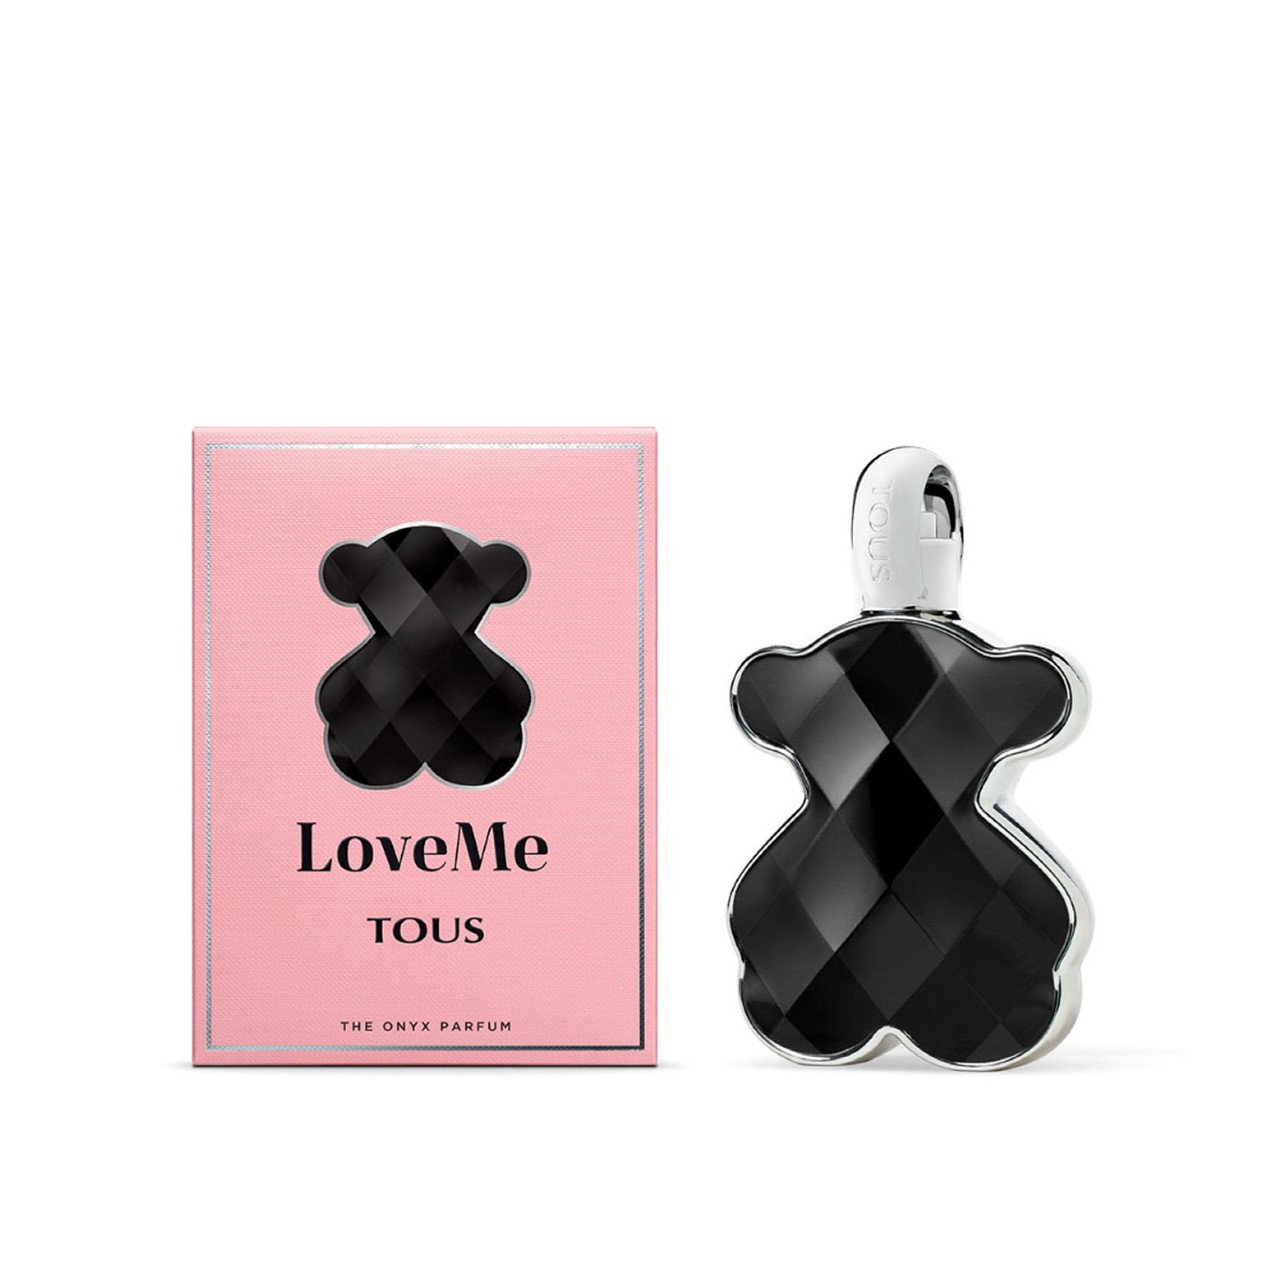 Tous LoveMe The Onyx Parfum 50ml (1.69fl oz)